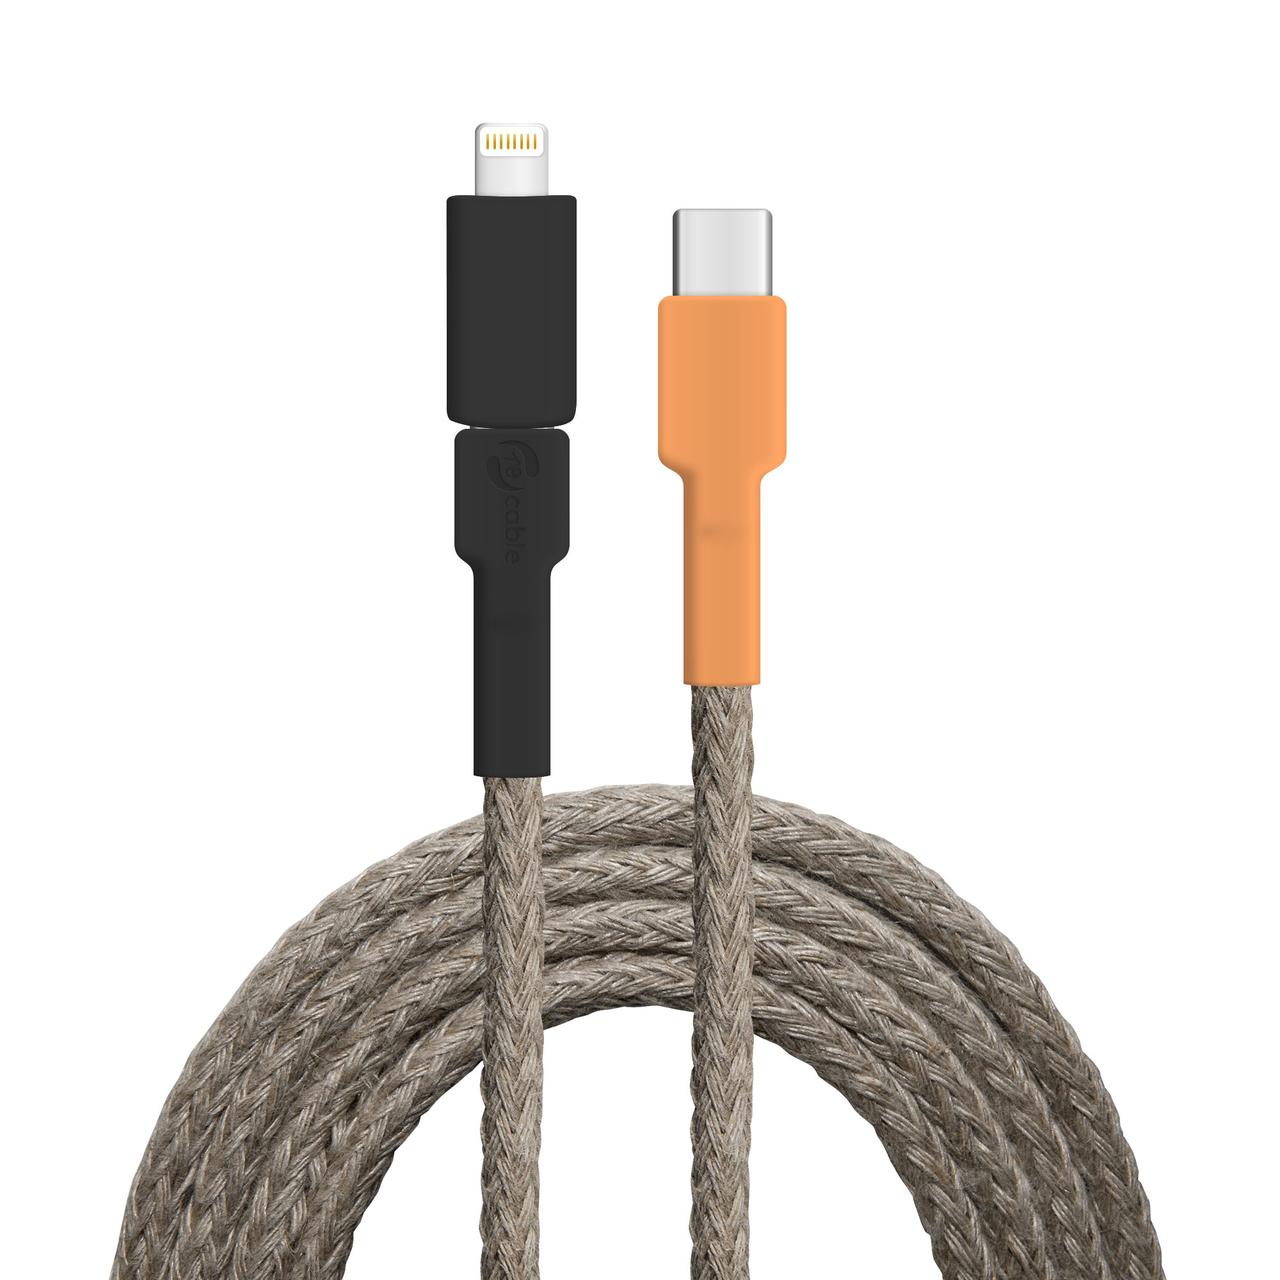 recable USB-C auf Lightning (Apple-Adapter) Kabel Wasserhahn